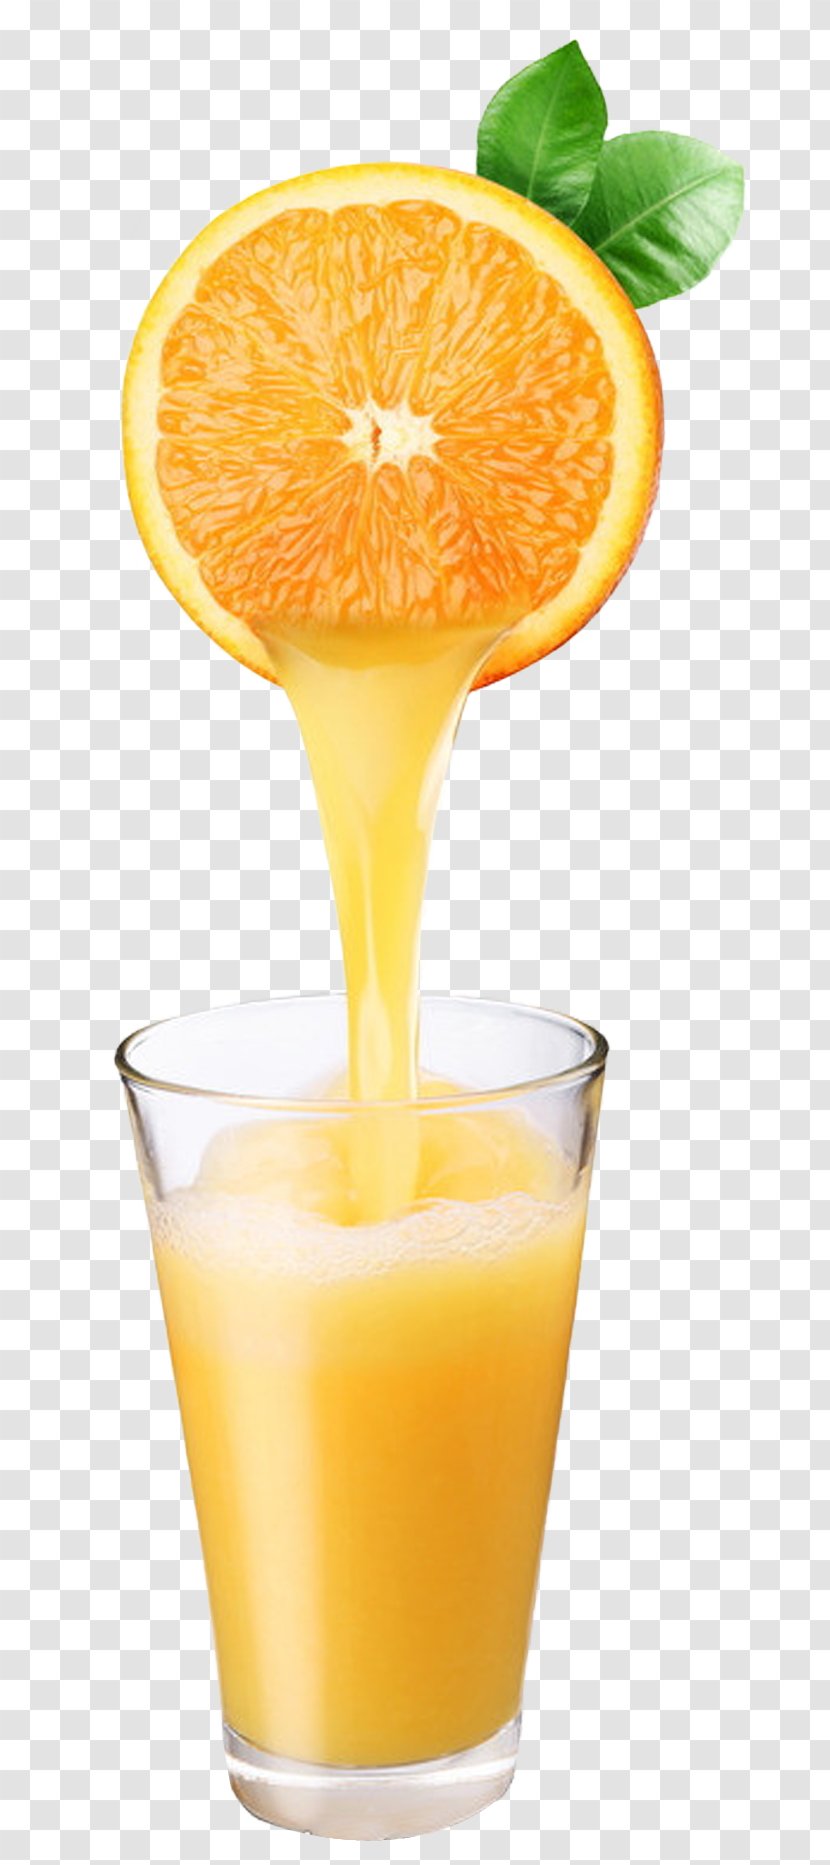 Orange Juice Soft Drink Smoothie Fruit - Vegetable - Ice Cream Cartoon Image Picture Material,Orange Transparent PNG